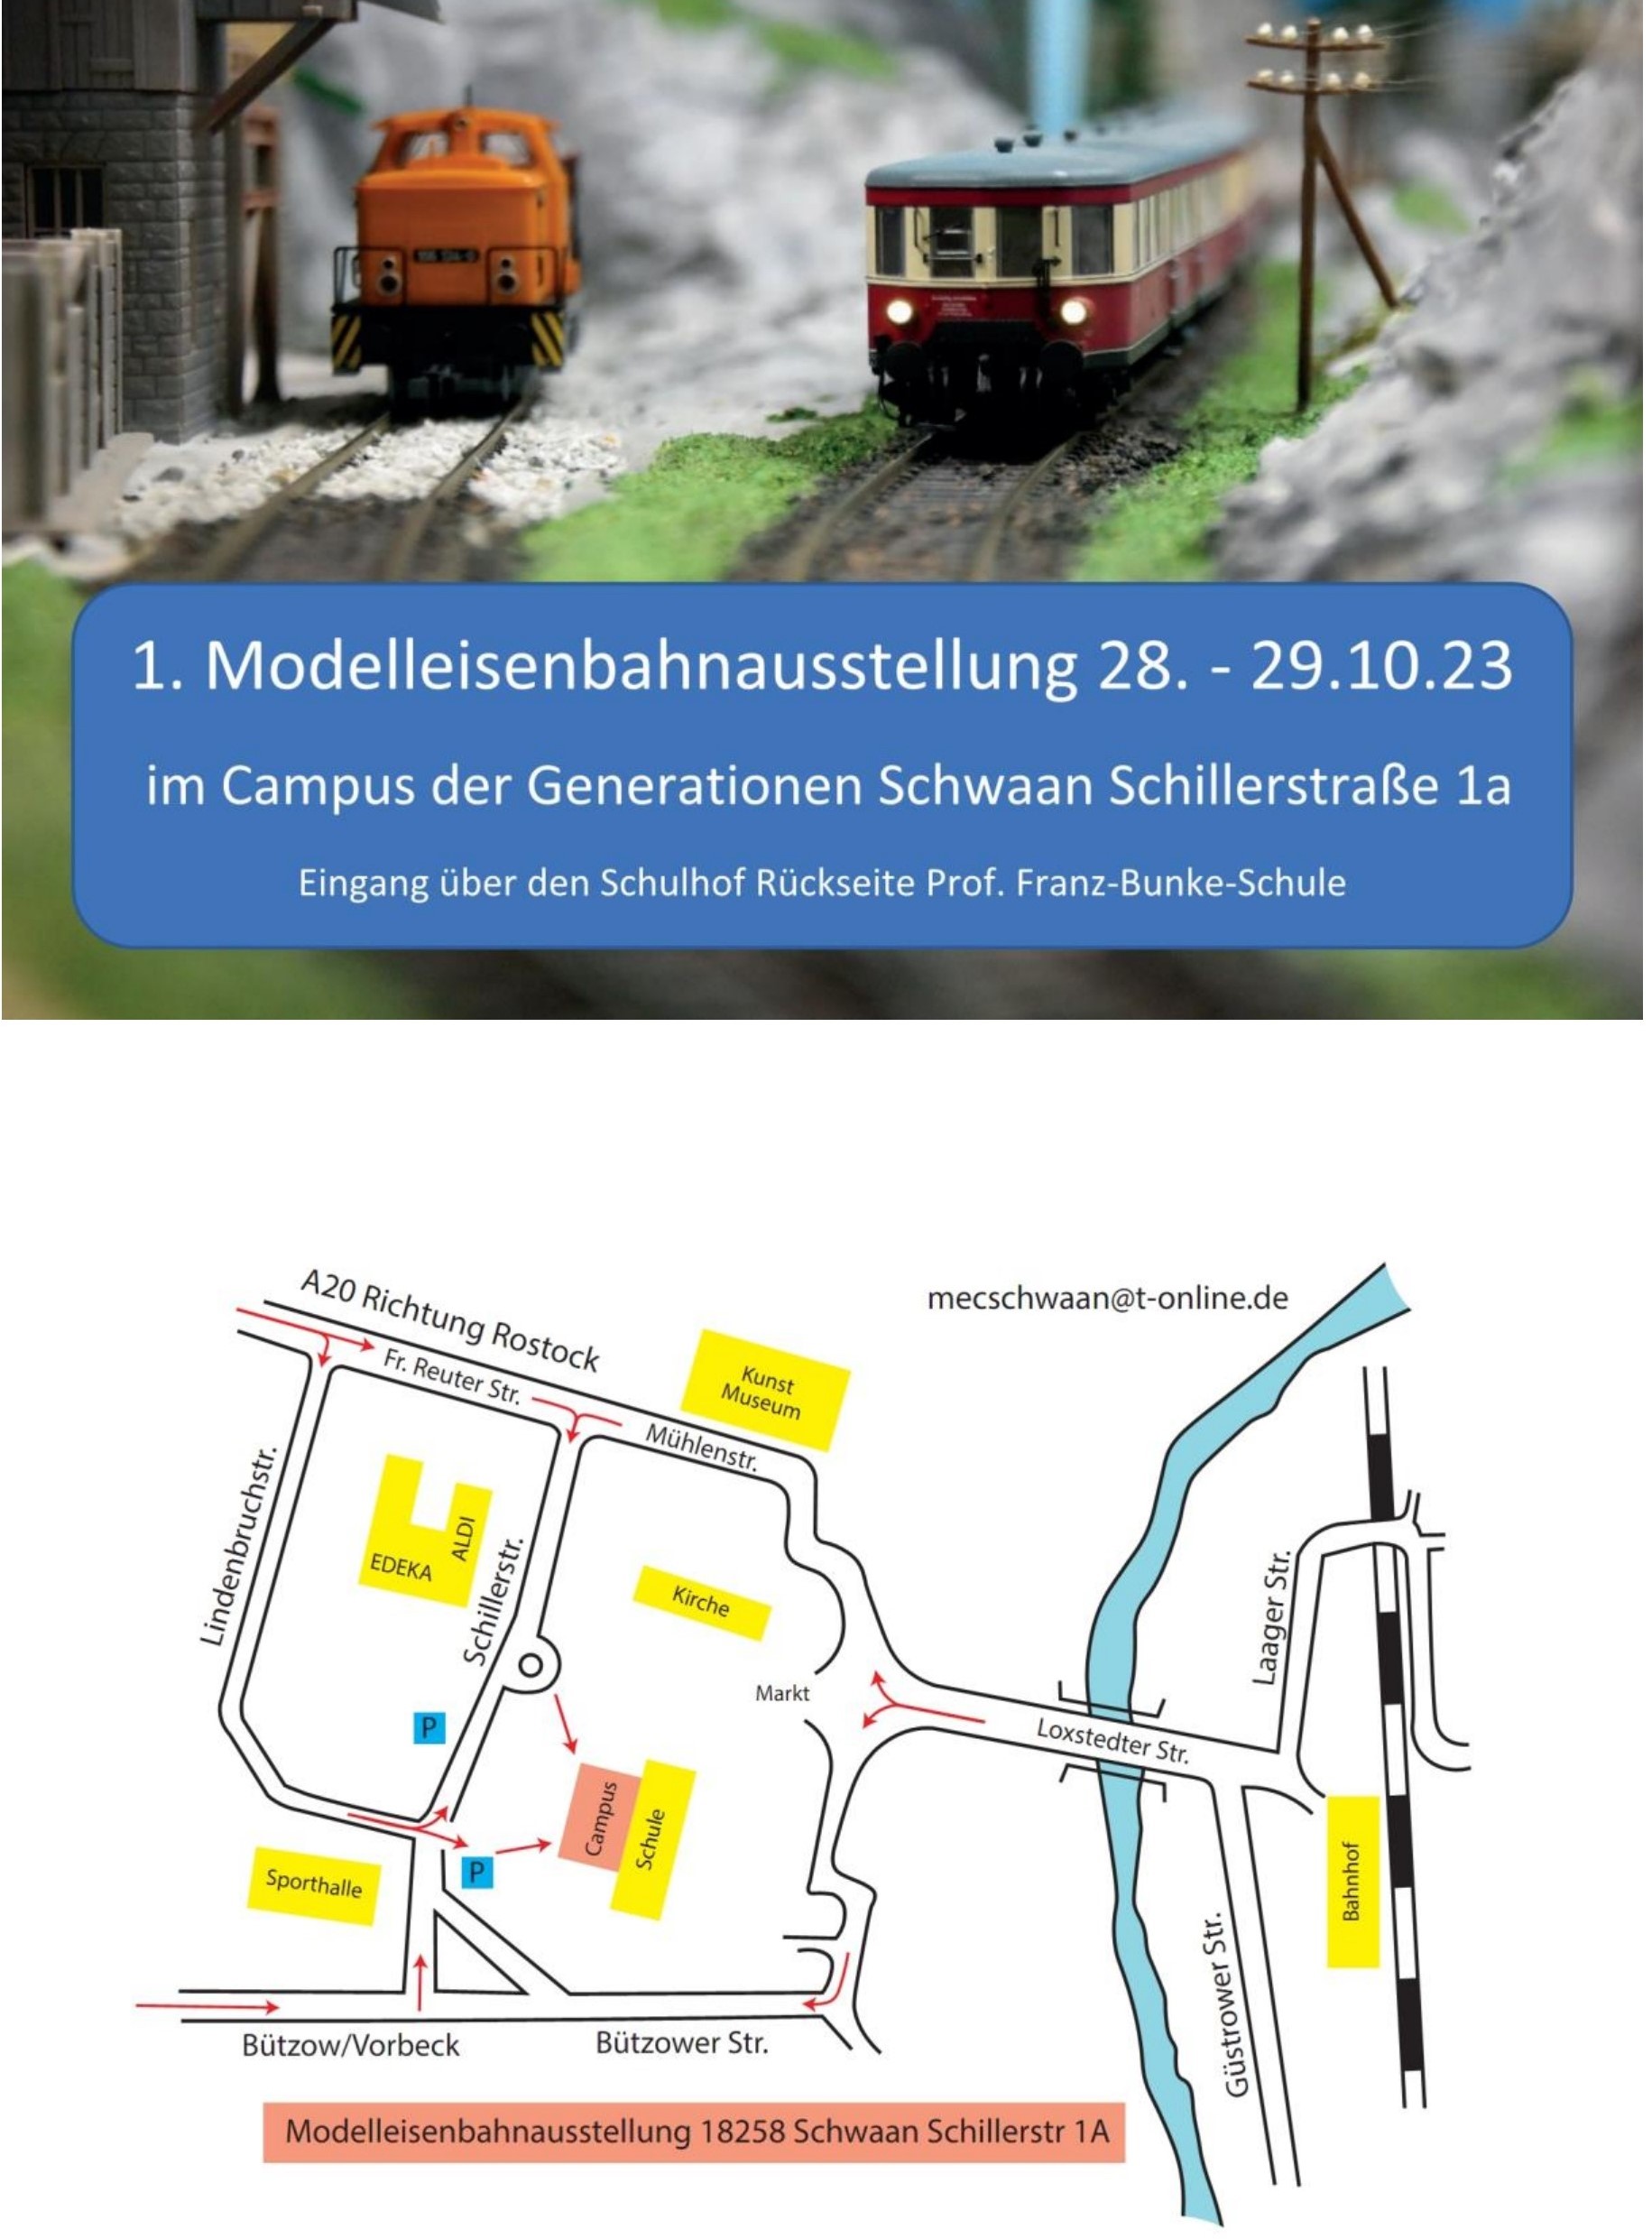 1. Modellbahnausstellung in Schwaan